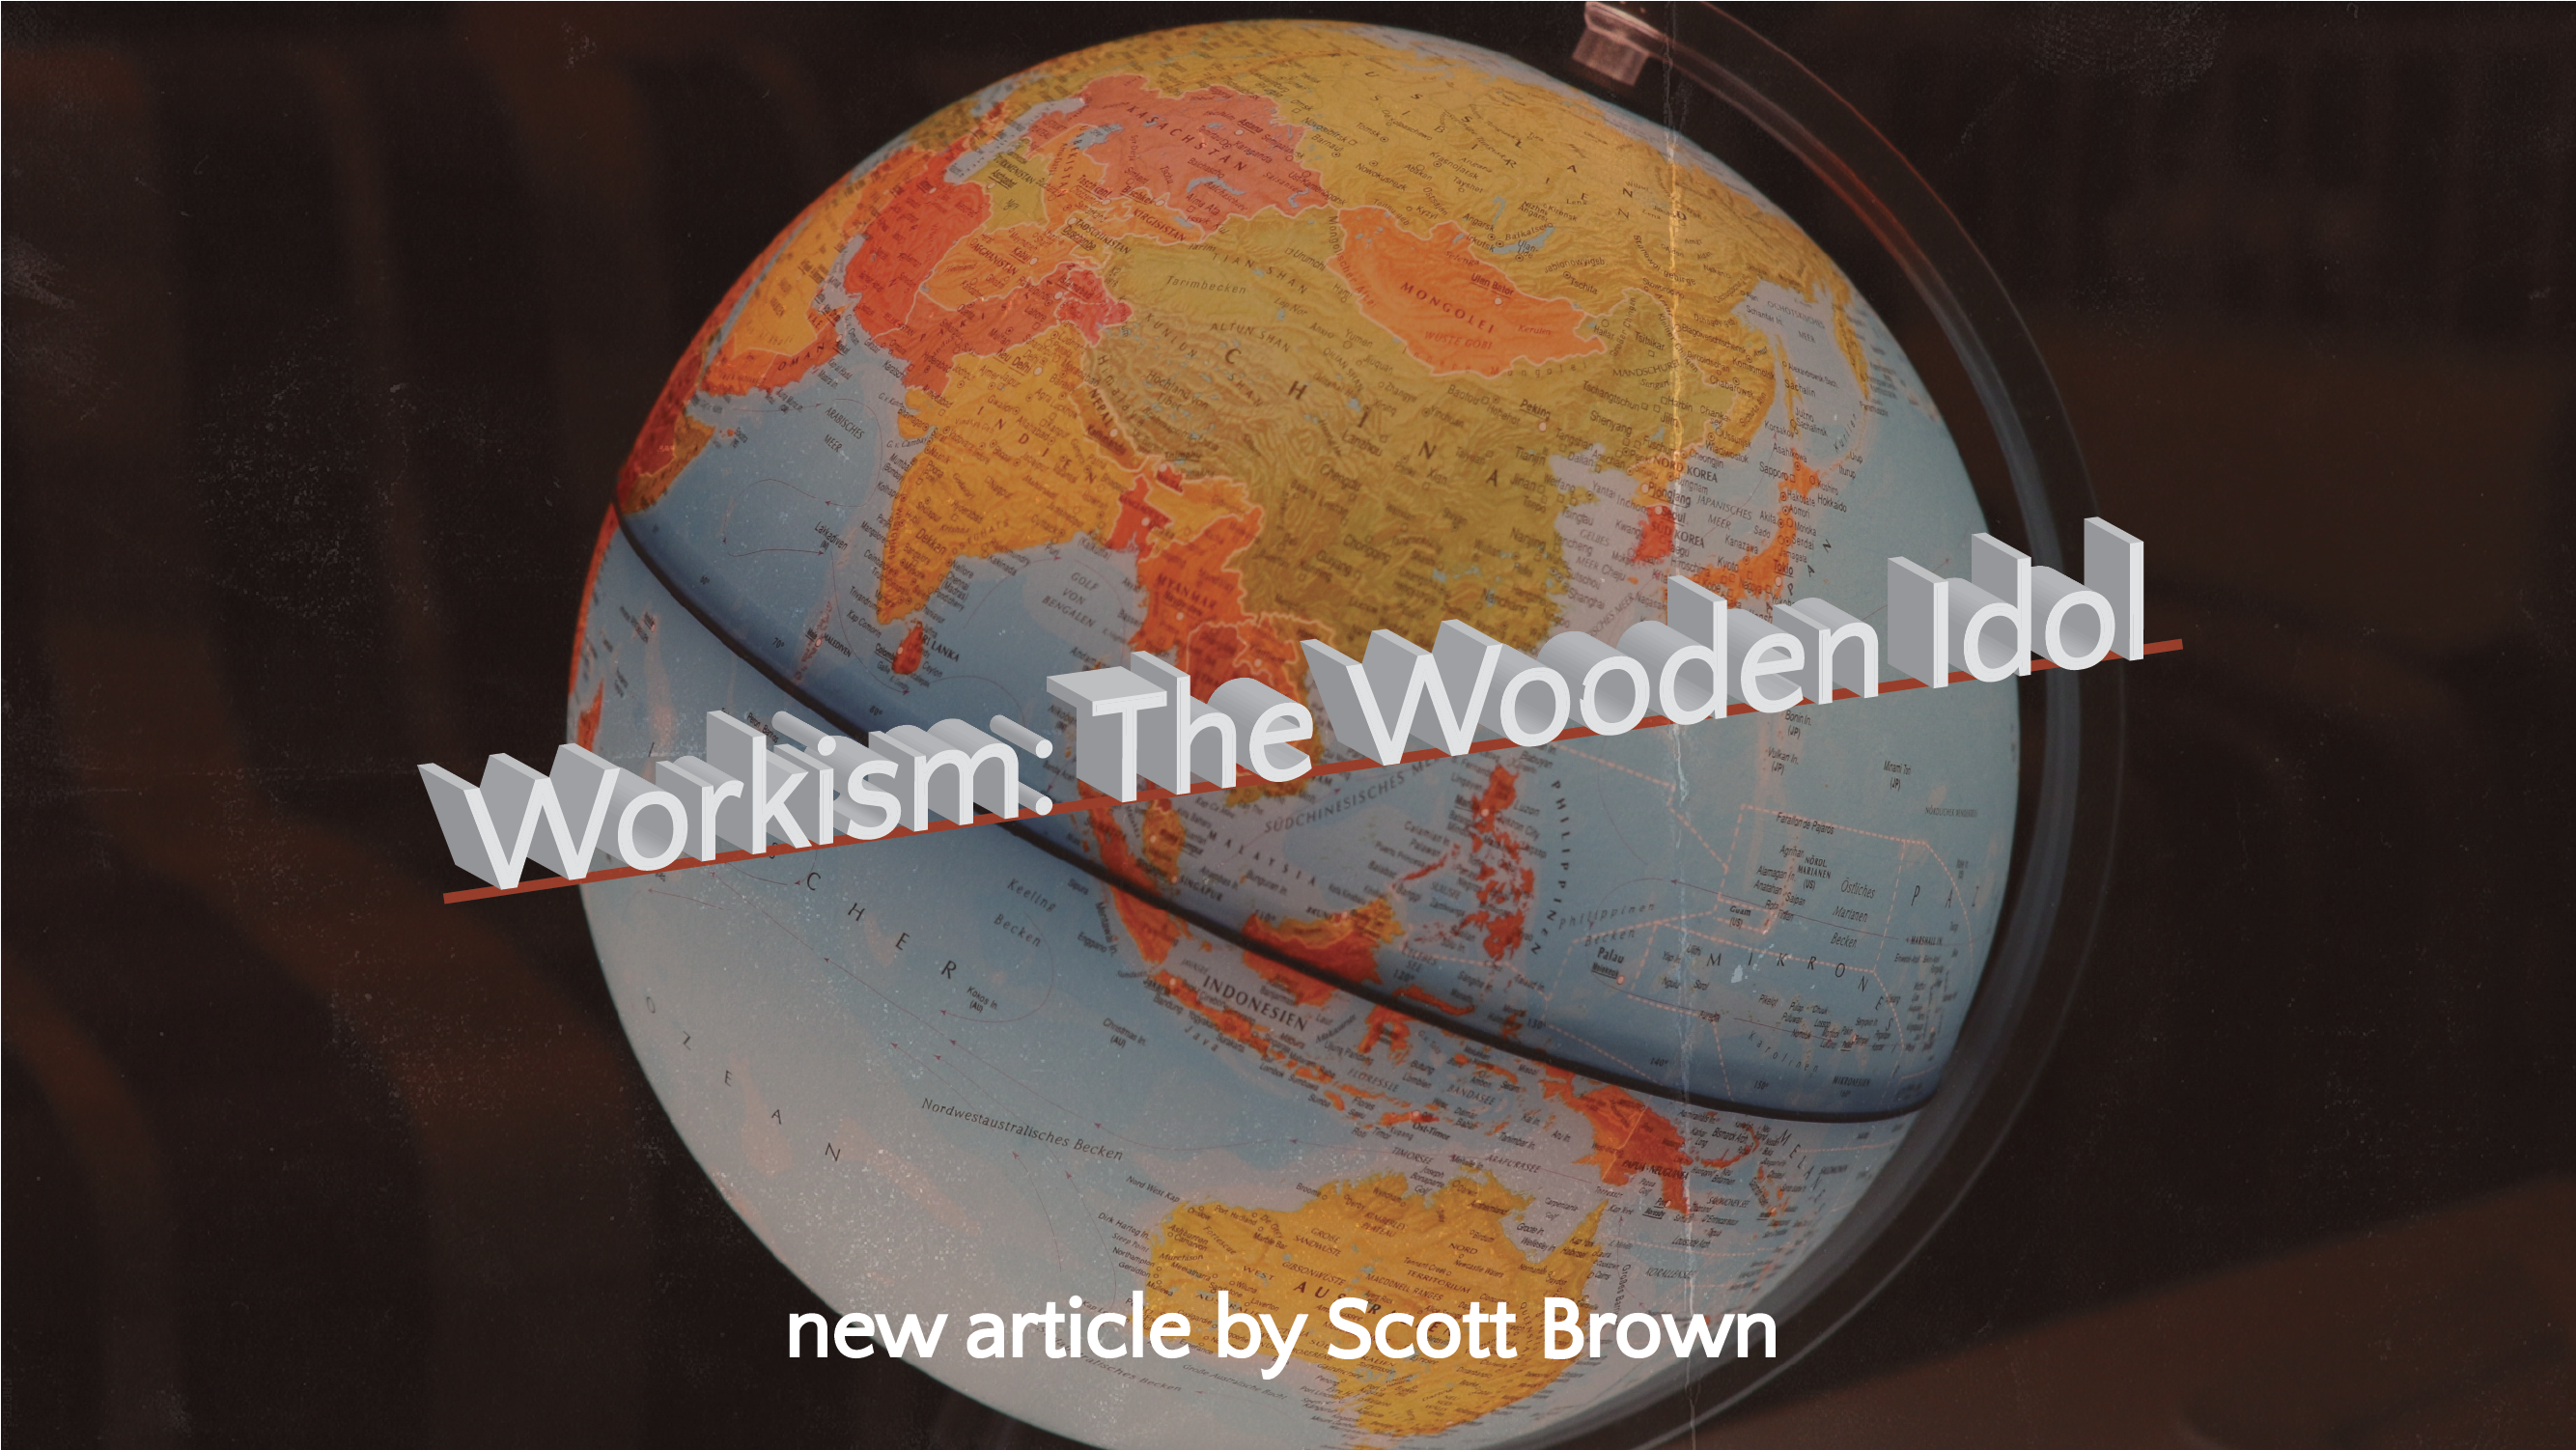 Workism: The Wooden Idol